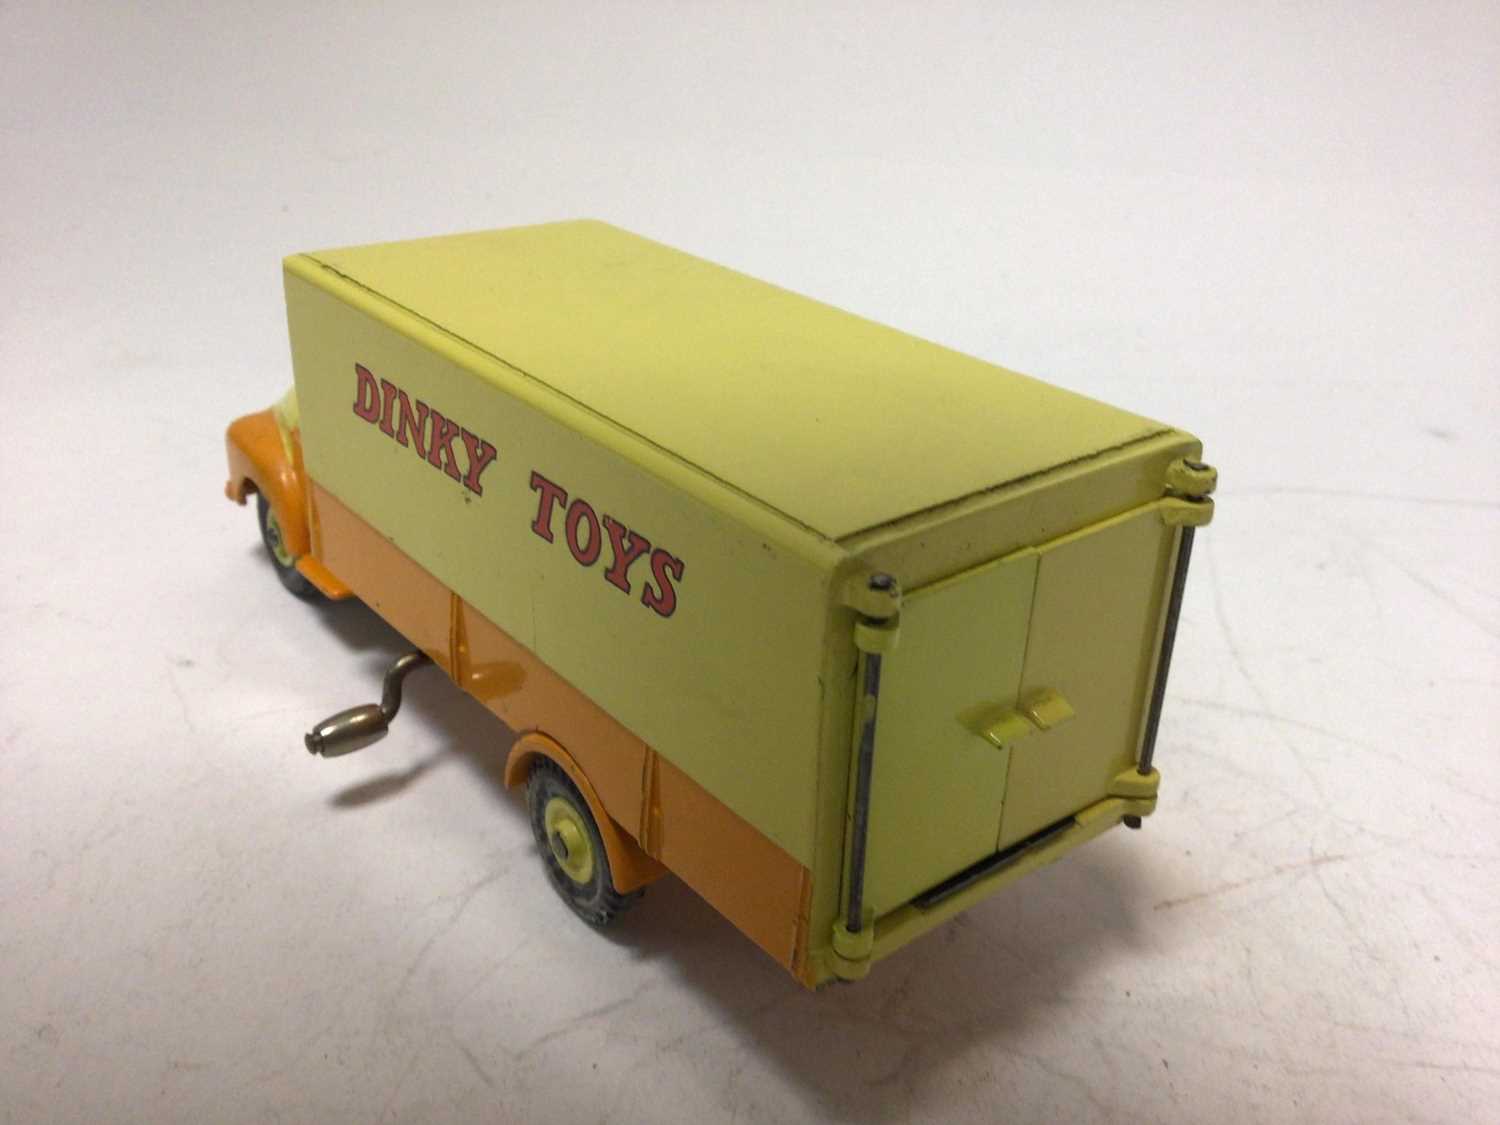 Dinky Supertoys Beford pallet jekta van Dinky toy No. 930 boxed - Image 5 of 8